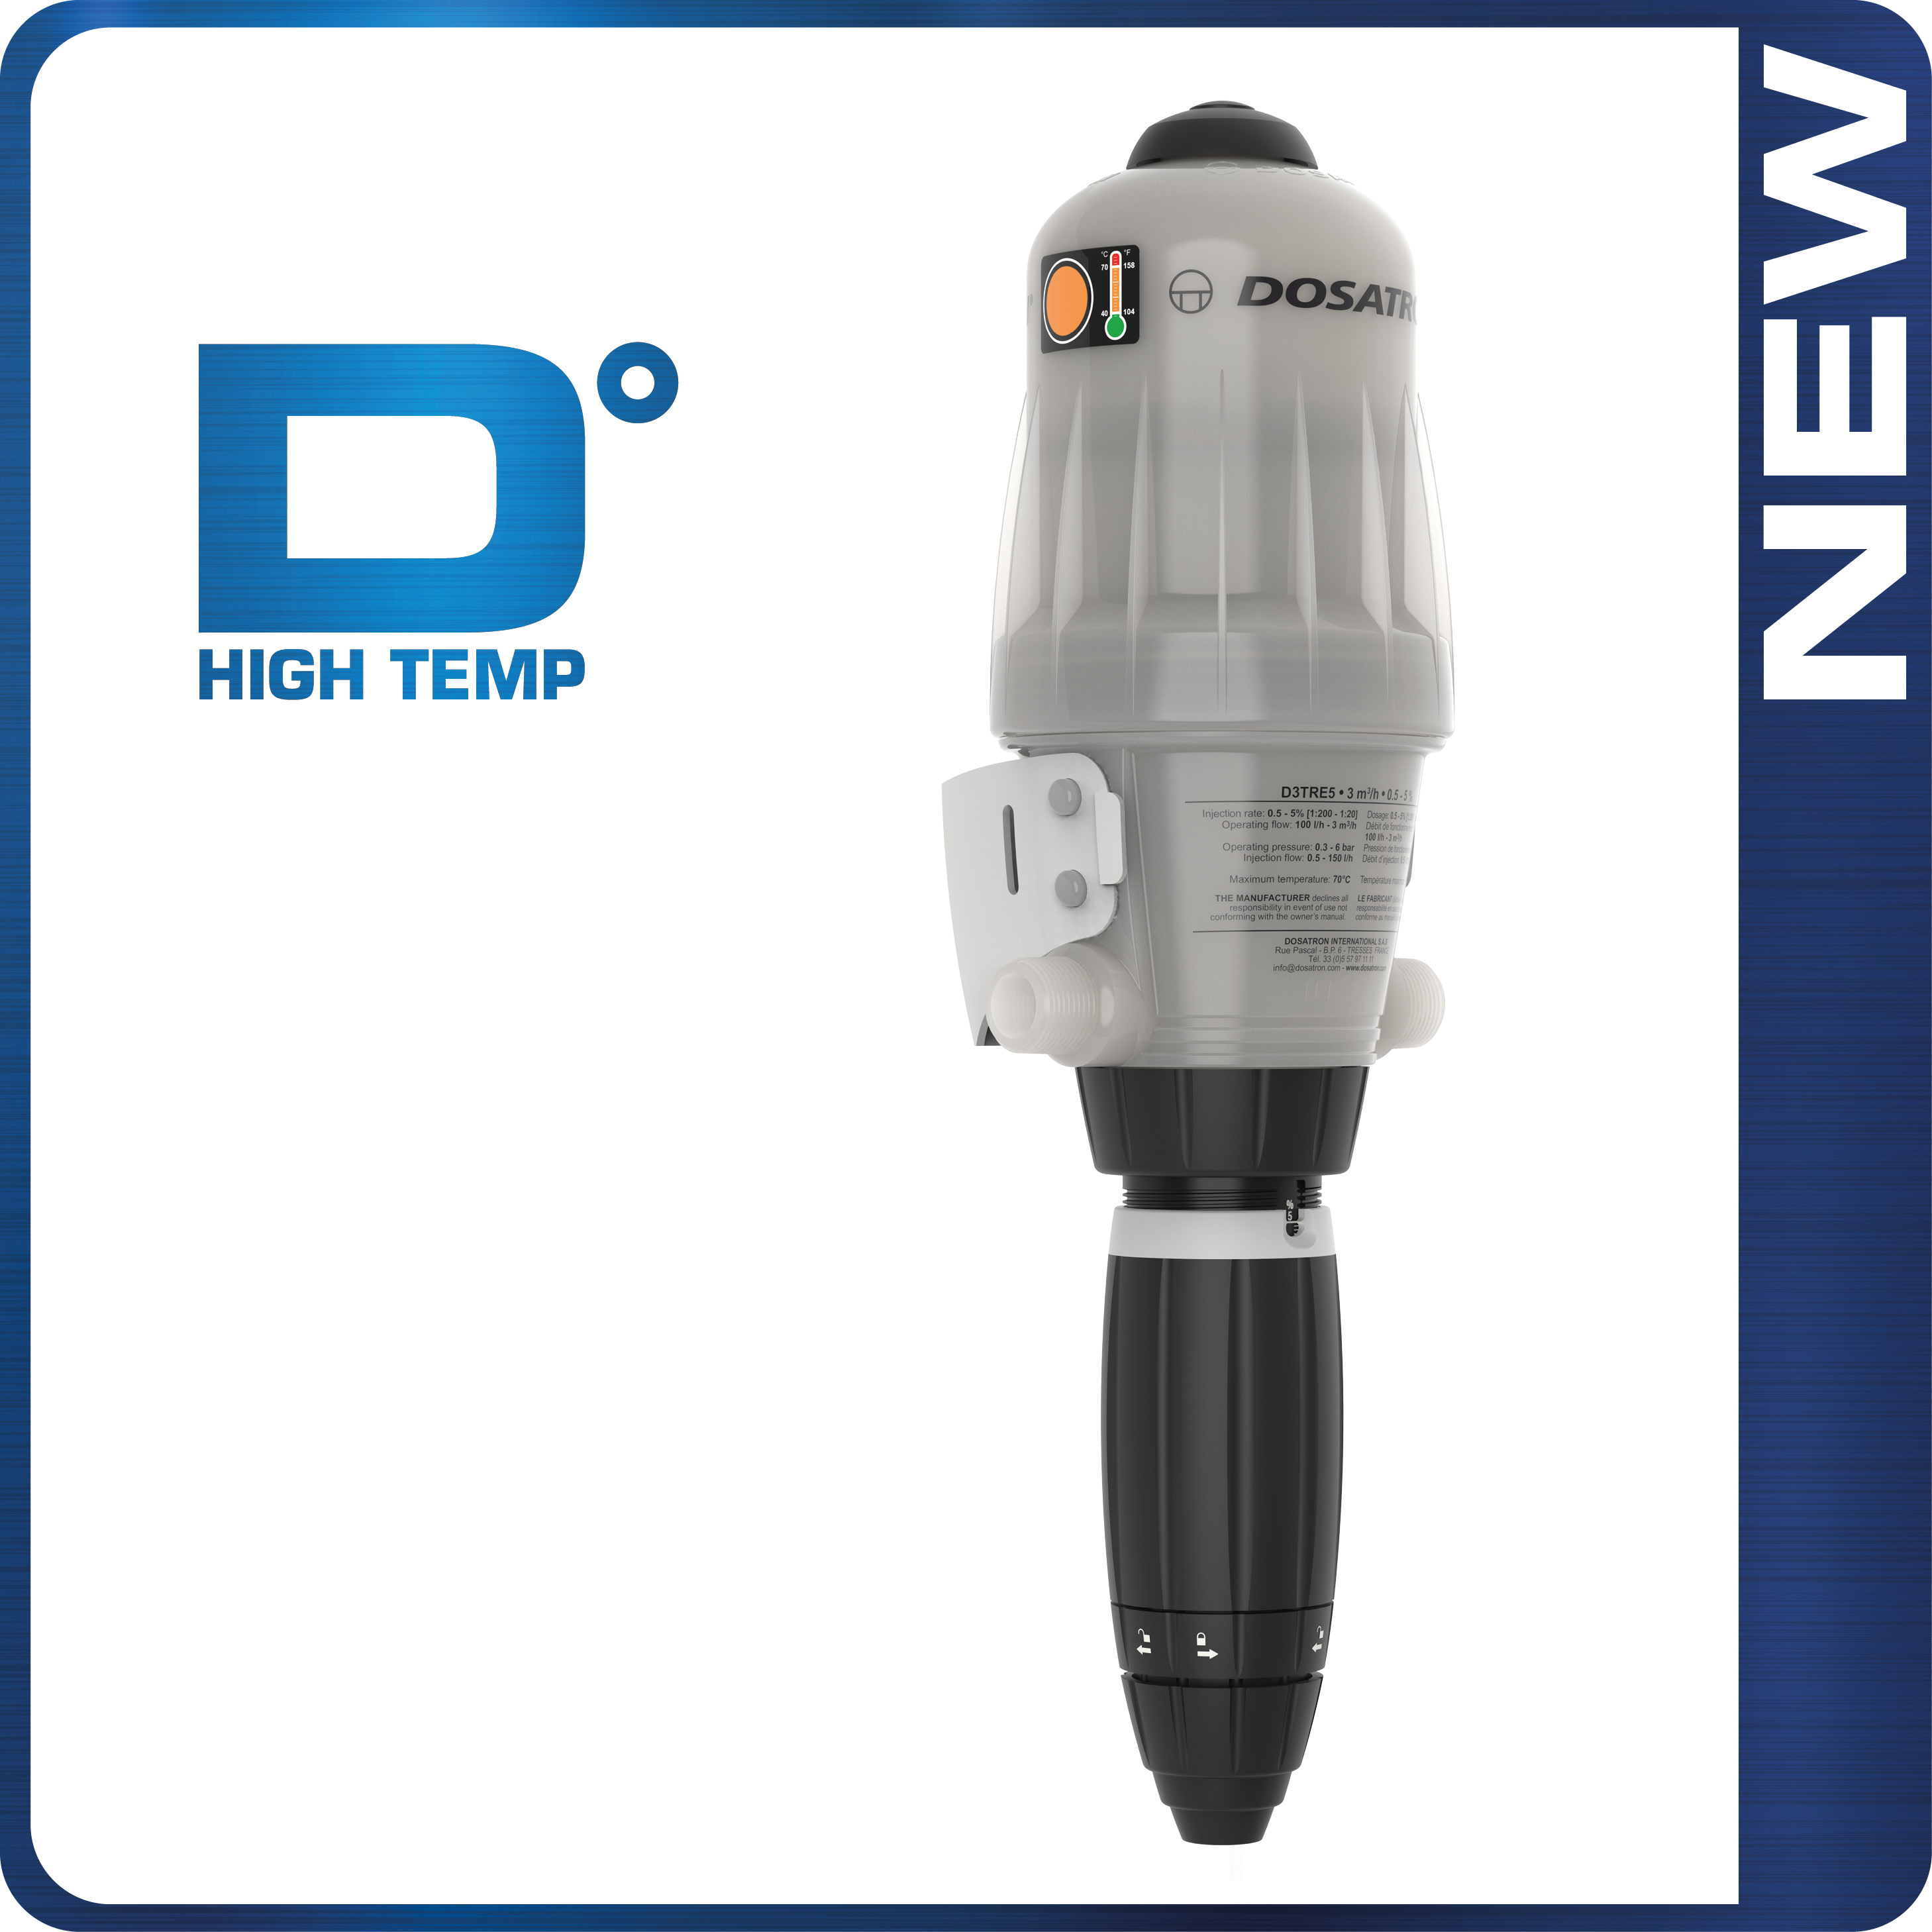 Hight Temperature Dosing pump teaser media| Dosatron 